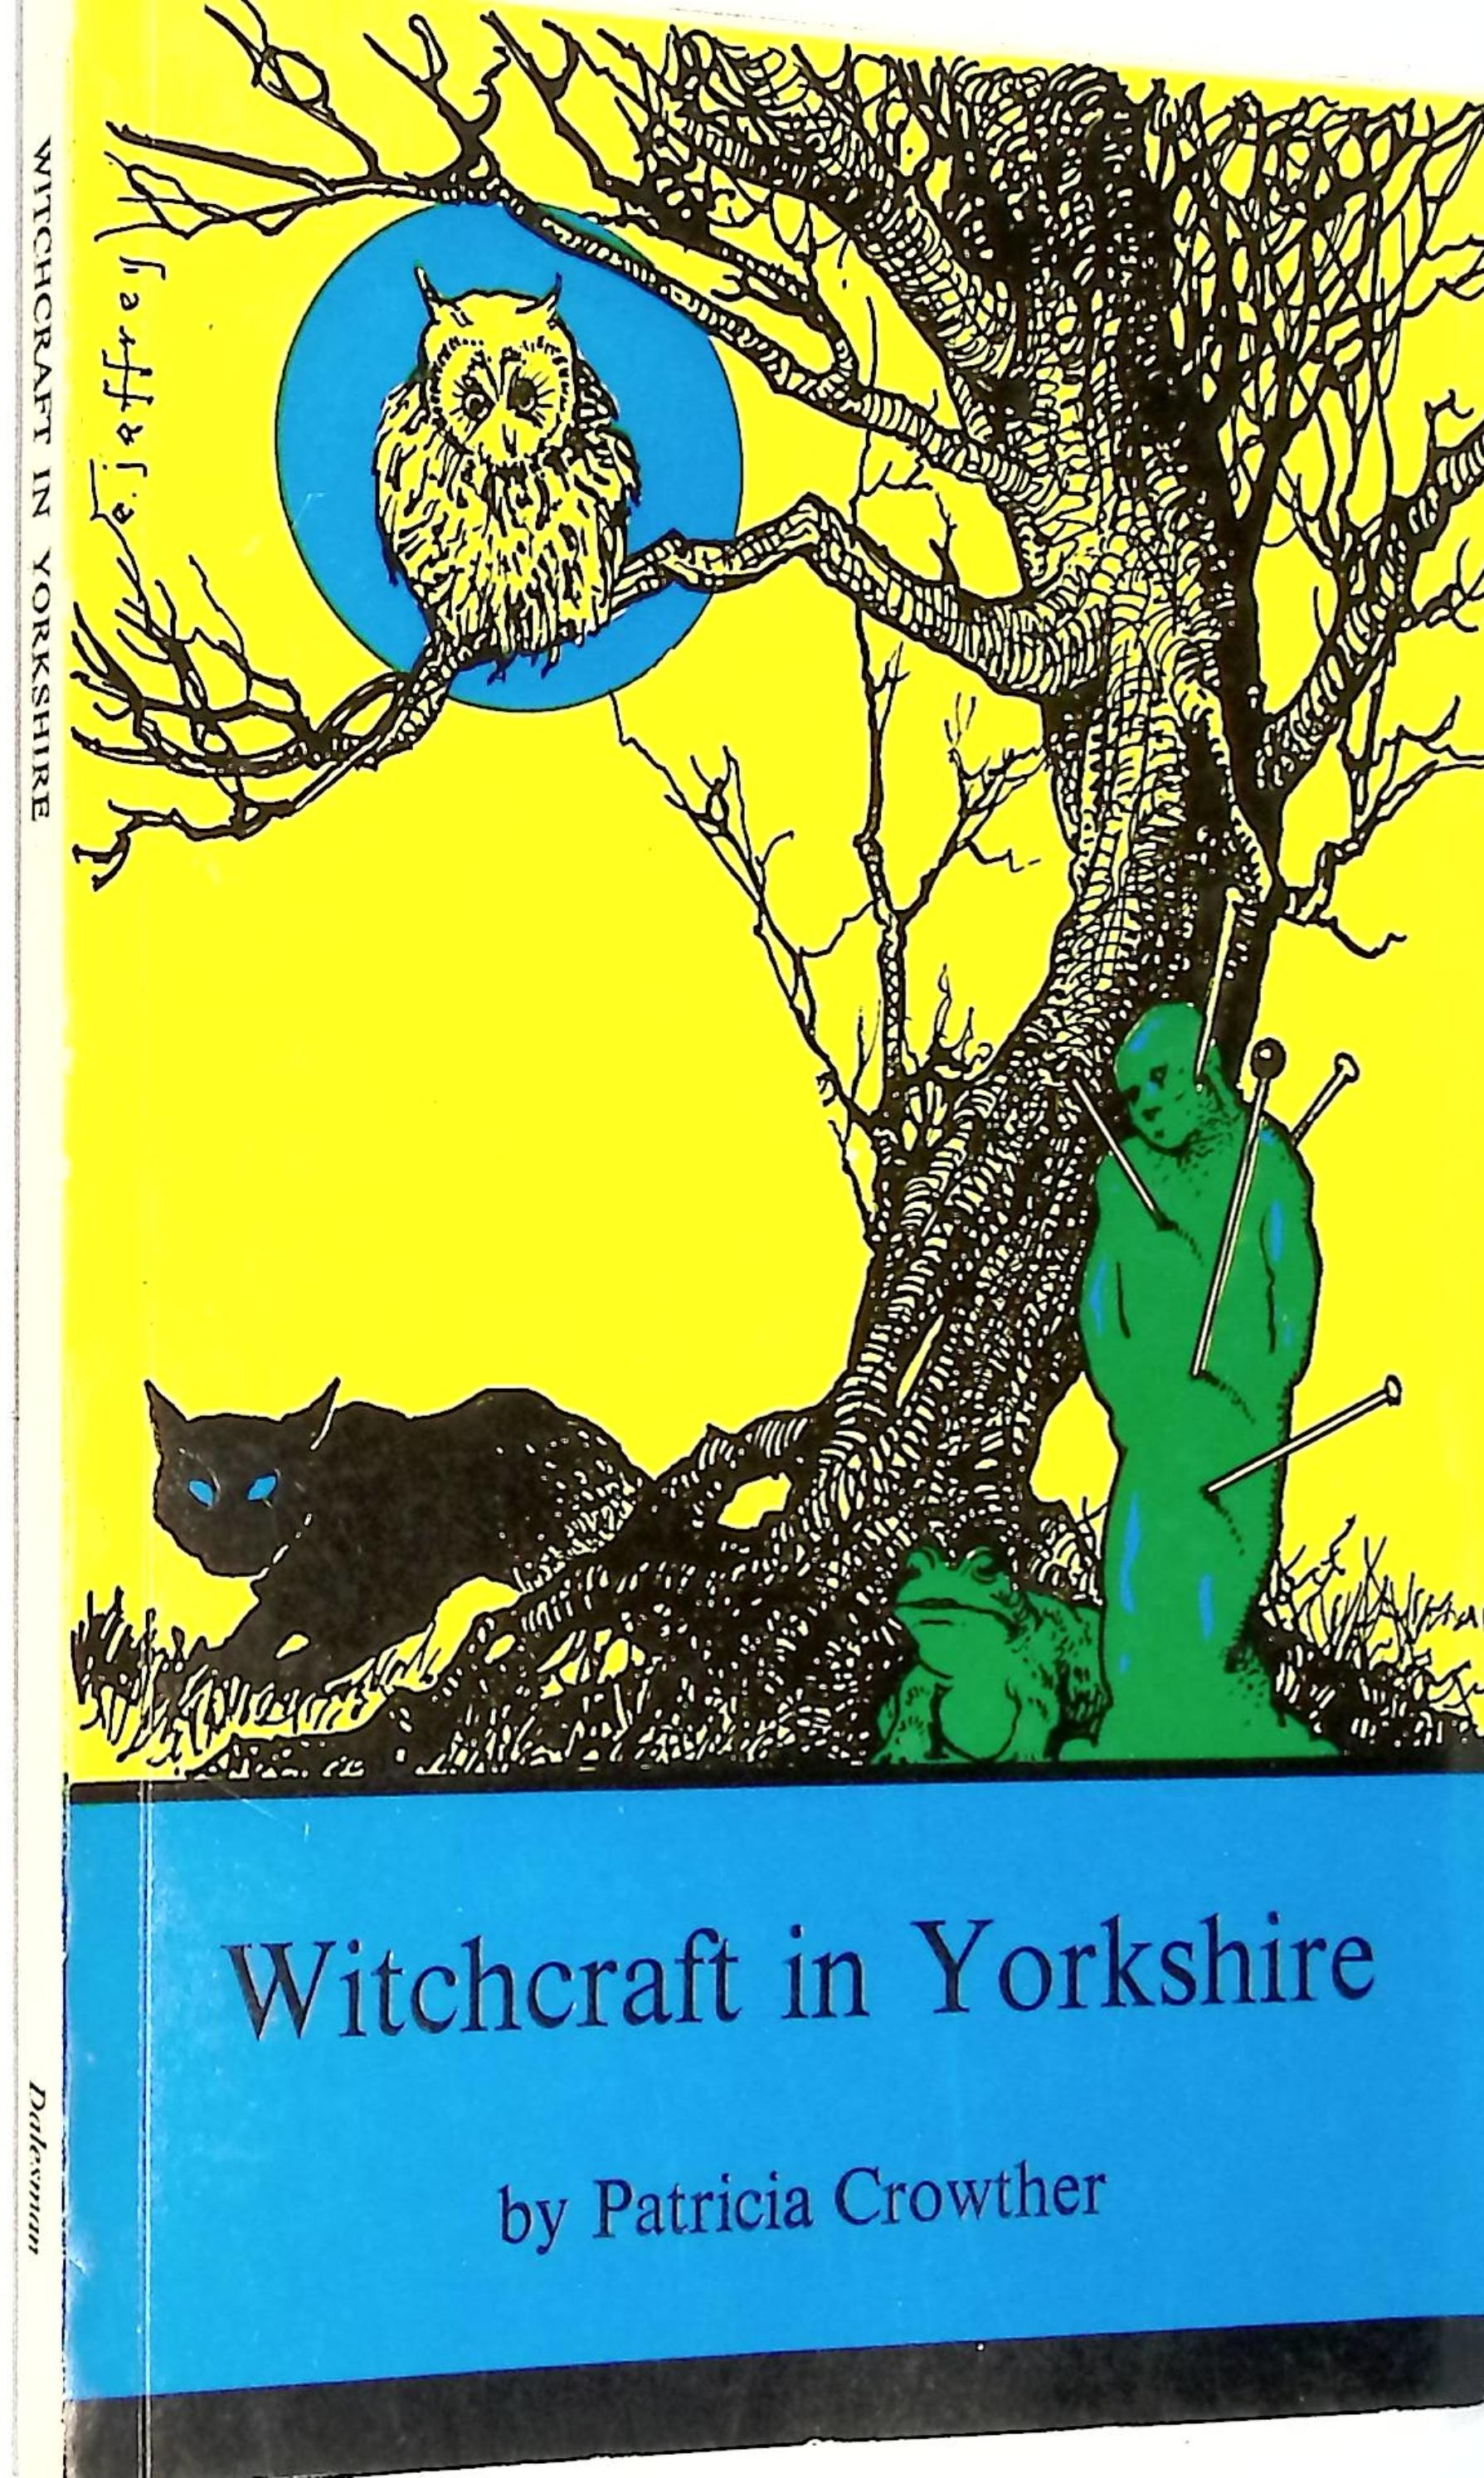 Witchcraft in Yorkshire